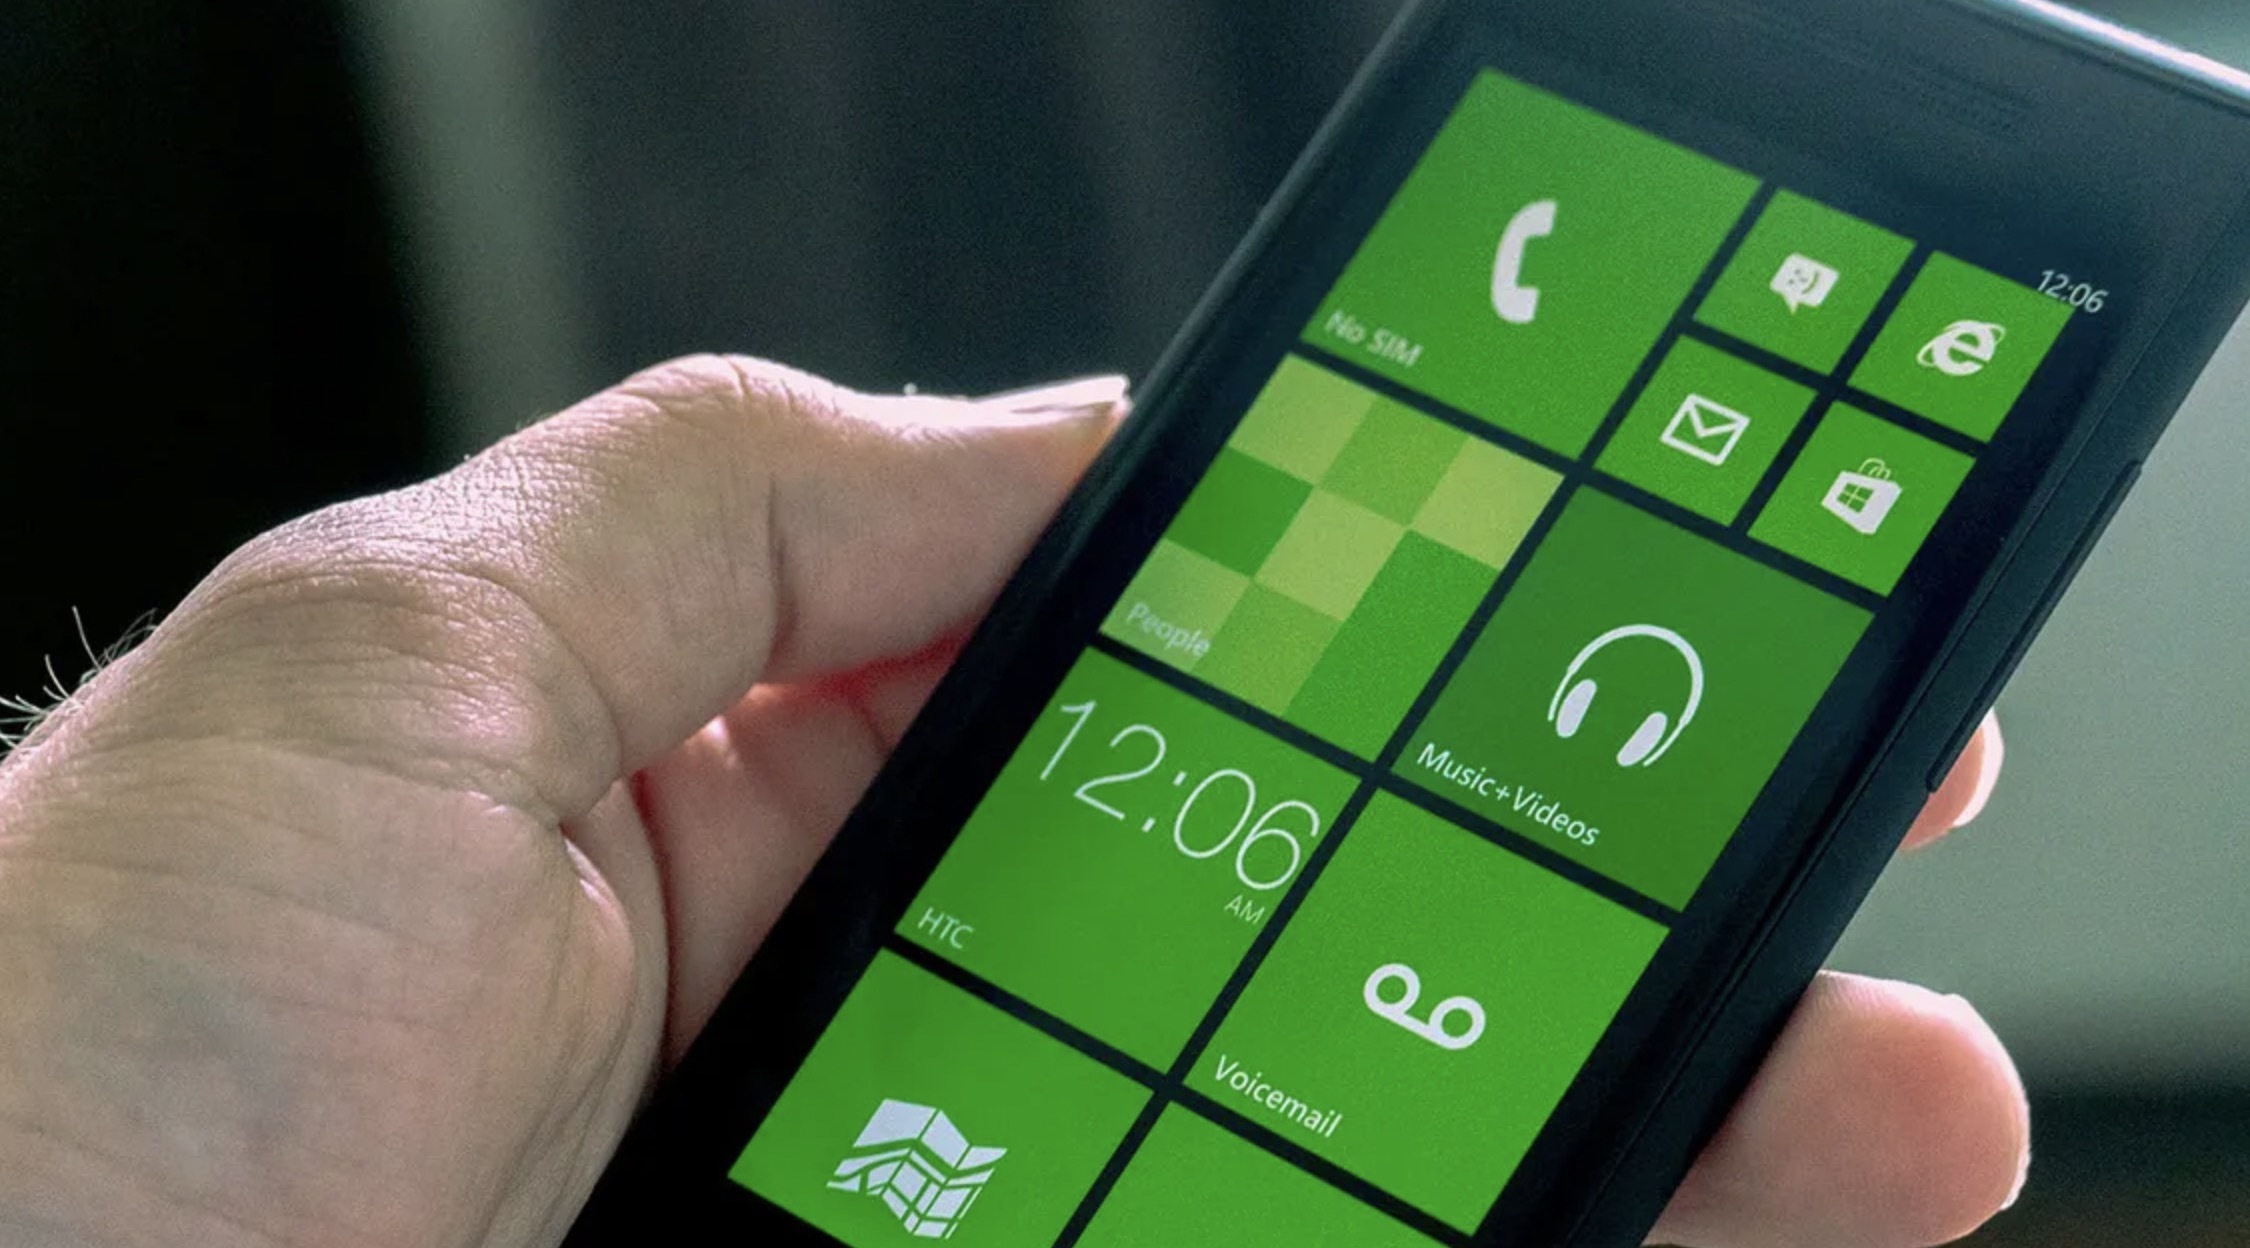  ChatGPT  Microsoft     Windows Phone